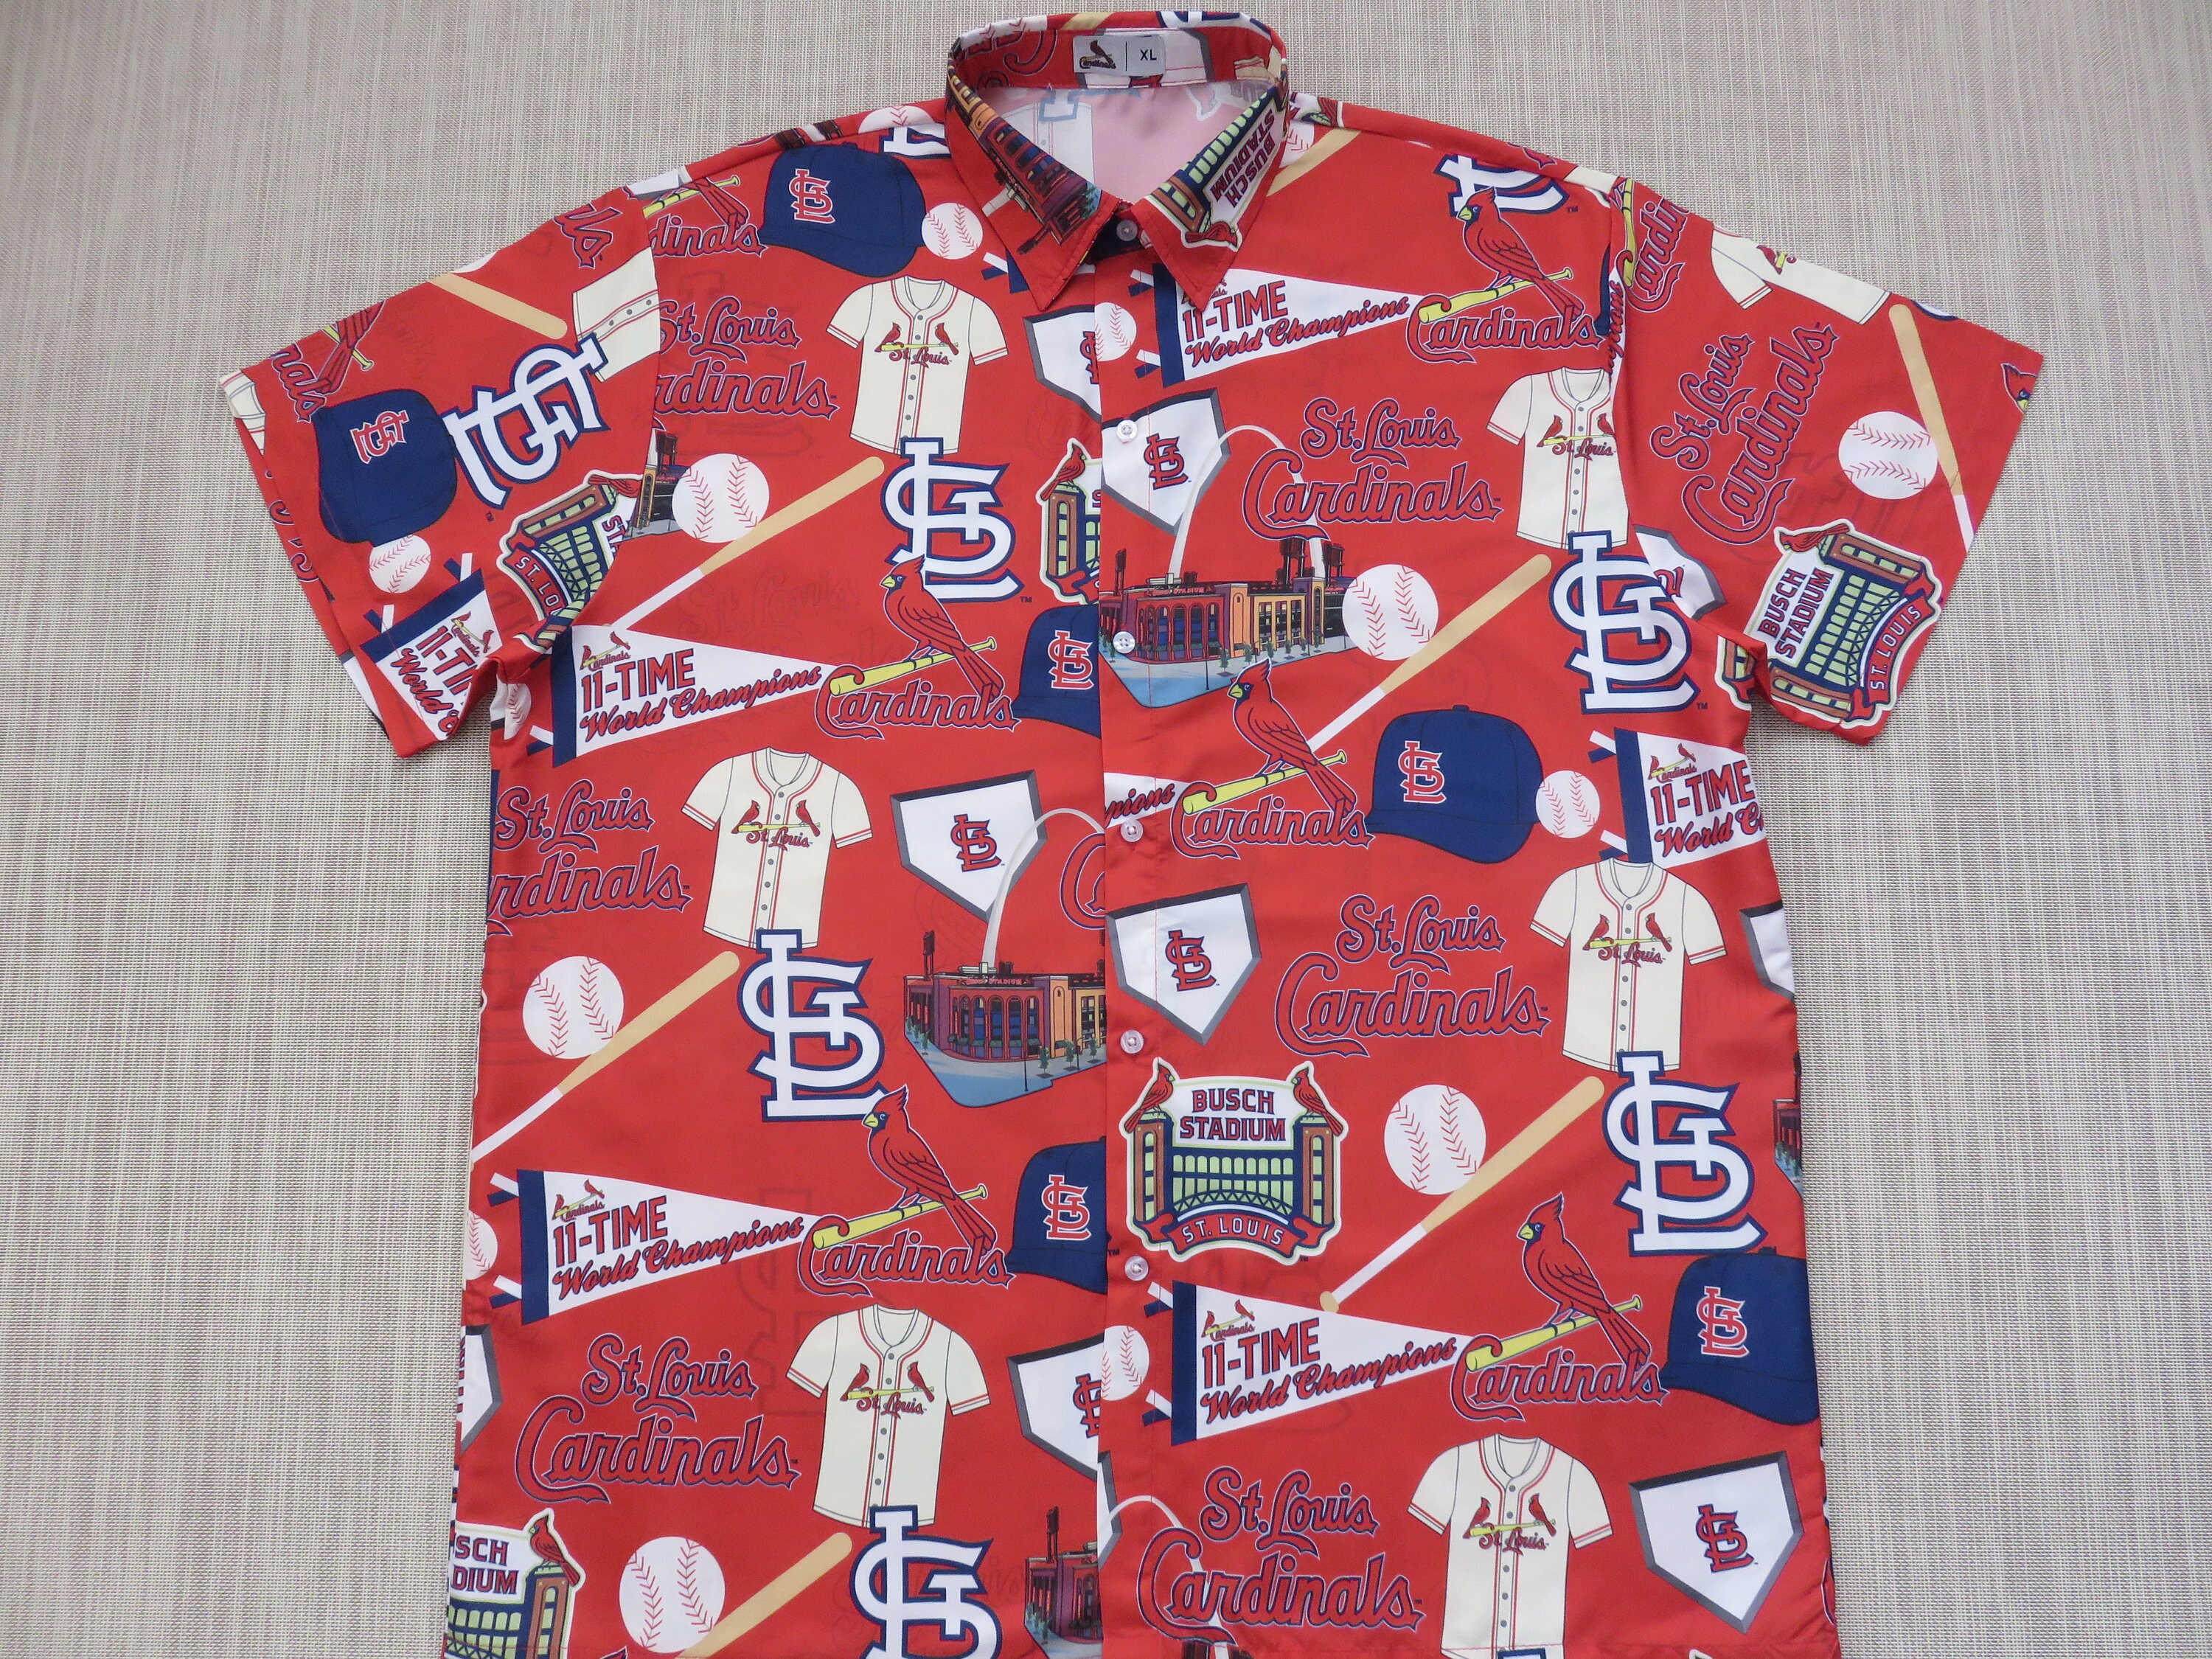 St. Louis Cardinals T Shirt 11 Rings World Series's Champions Red 2XL XXL